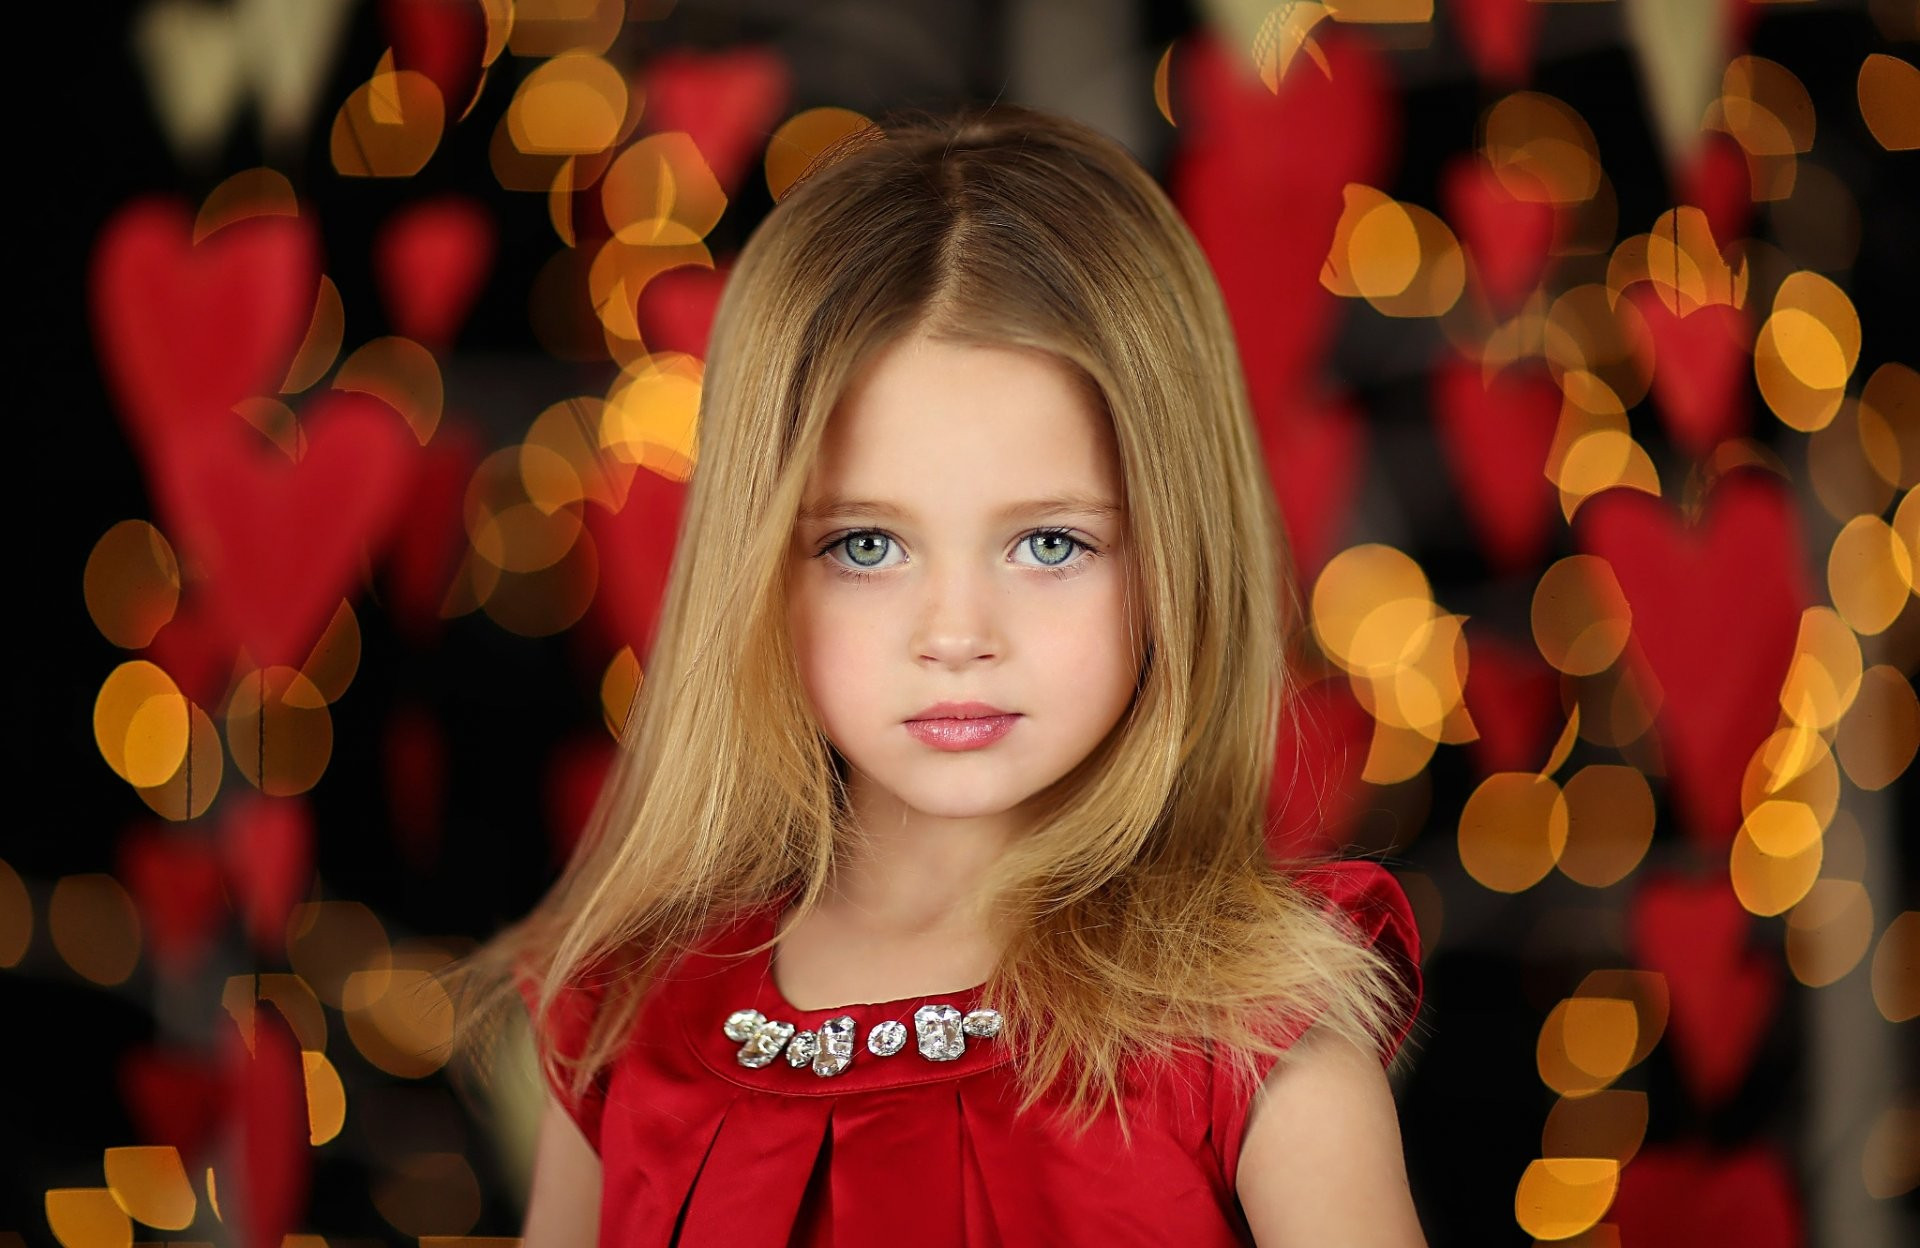 Cute little girl with blond hair